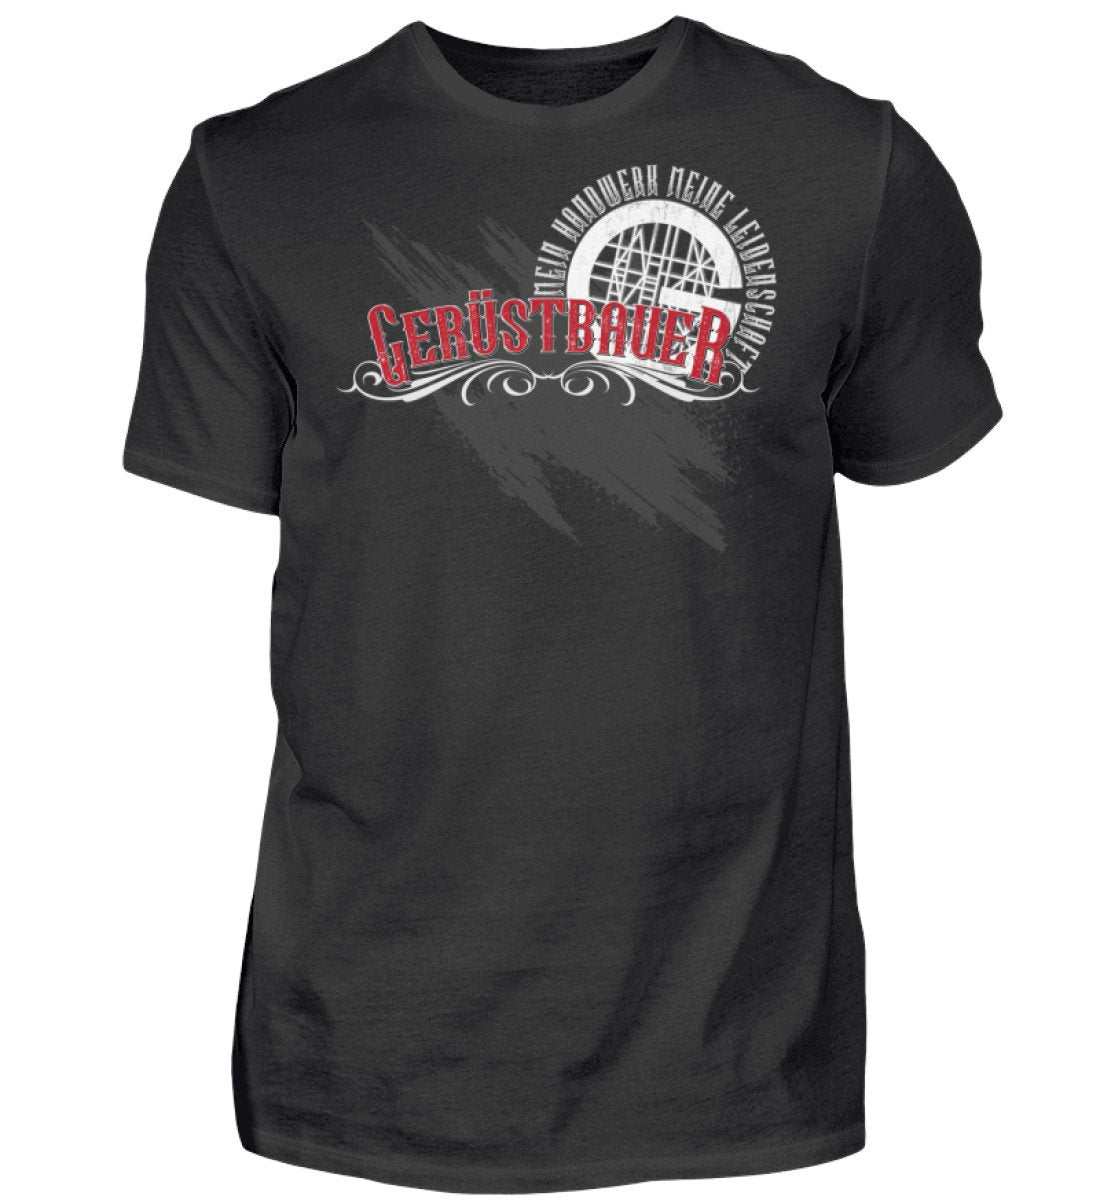 Gerüstbauer T-Shirt / Handwerk / Leidenschaft / Tradition www.geruestbauershop.de